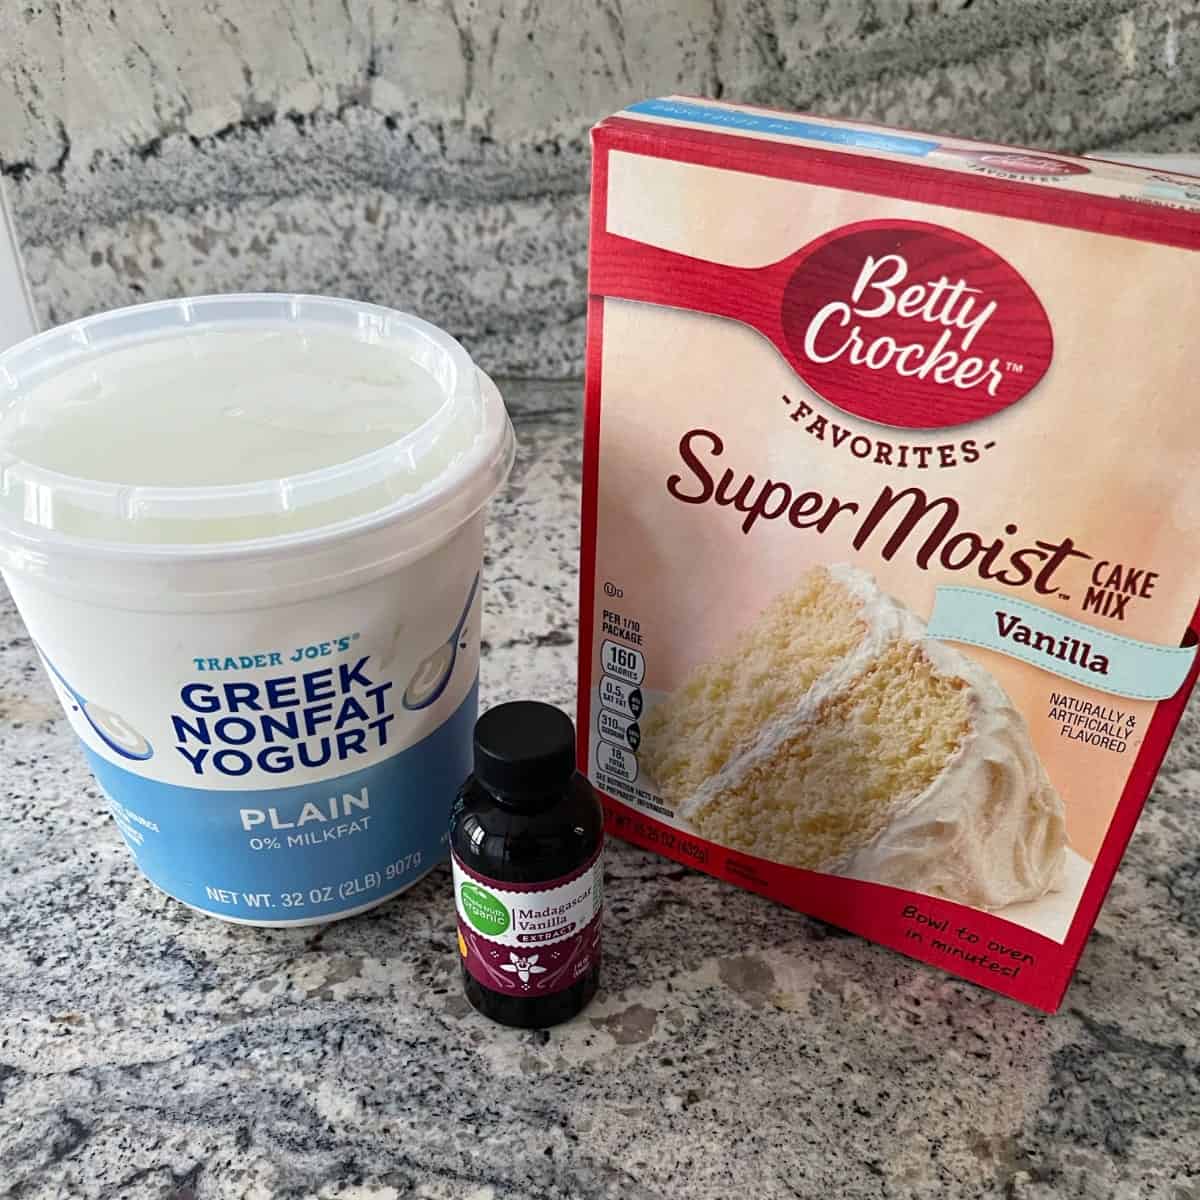 Box of Betty Crocker Super Moist Vanilla Cake Mix, bottle of vanilla extract and container of plain nonfat Greek yogurt.